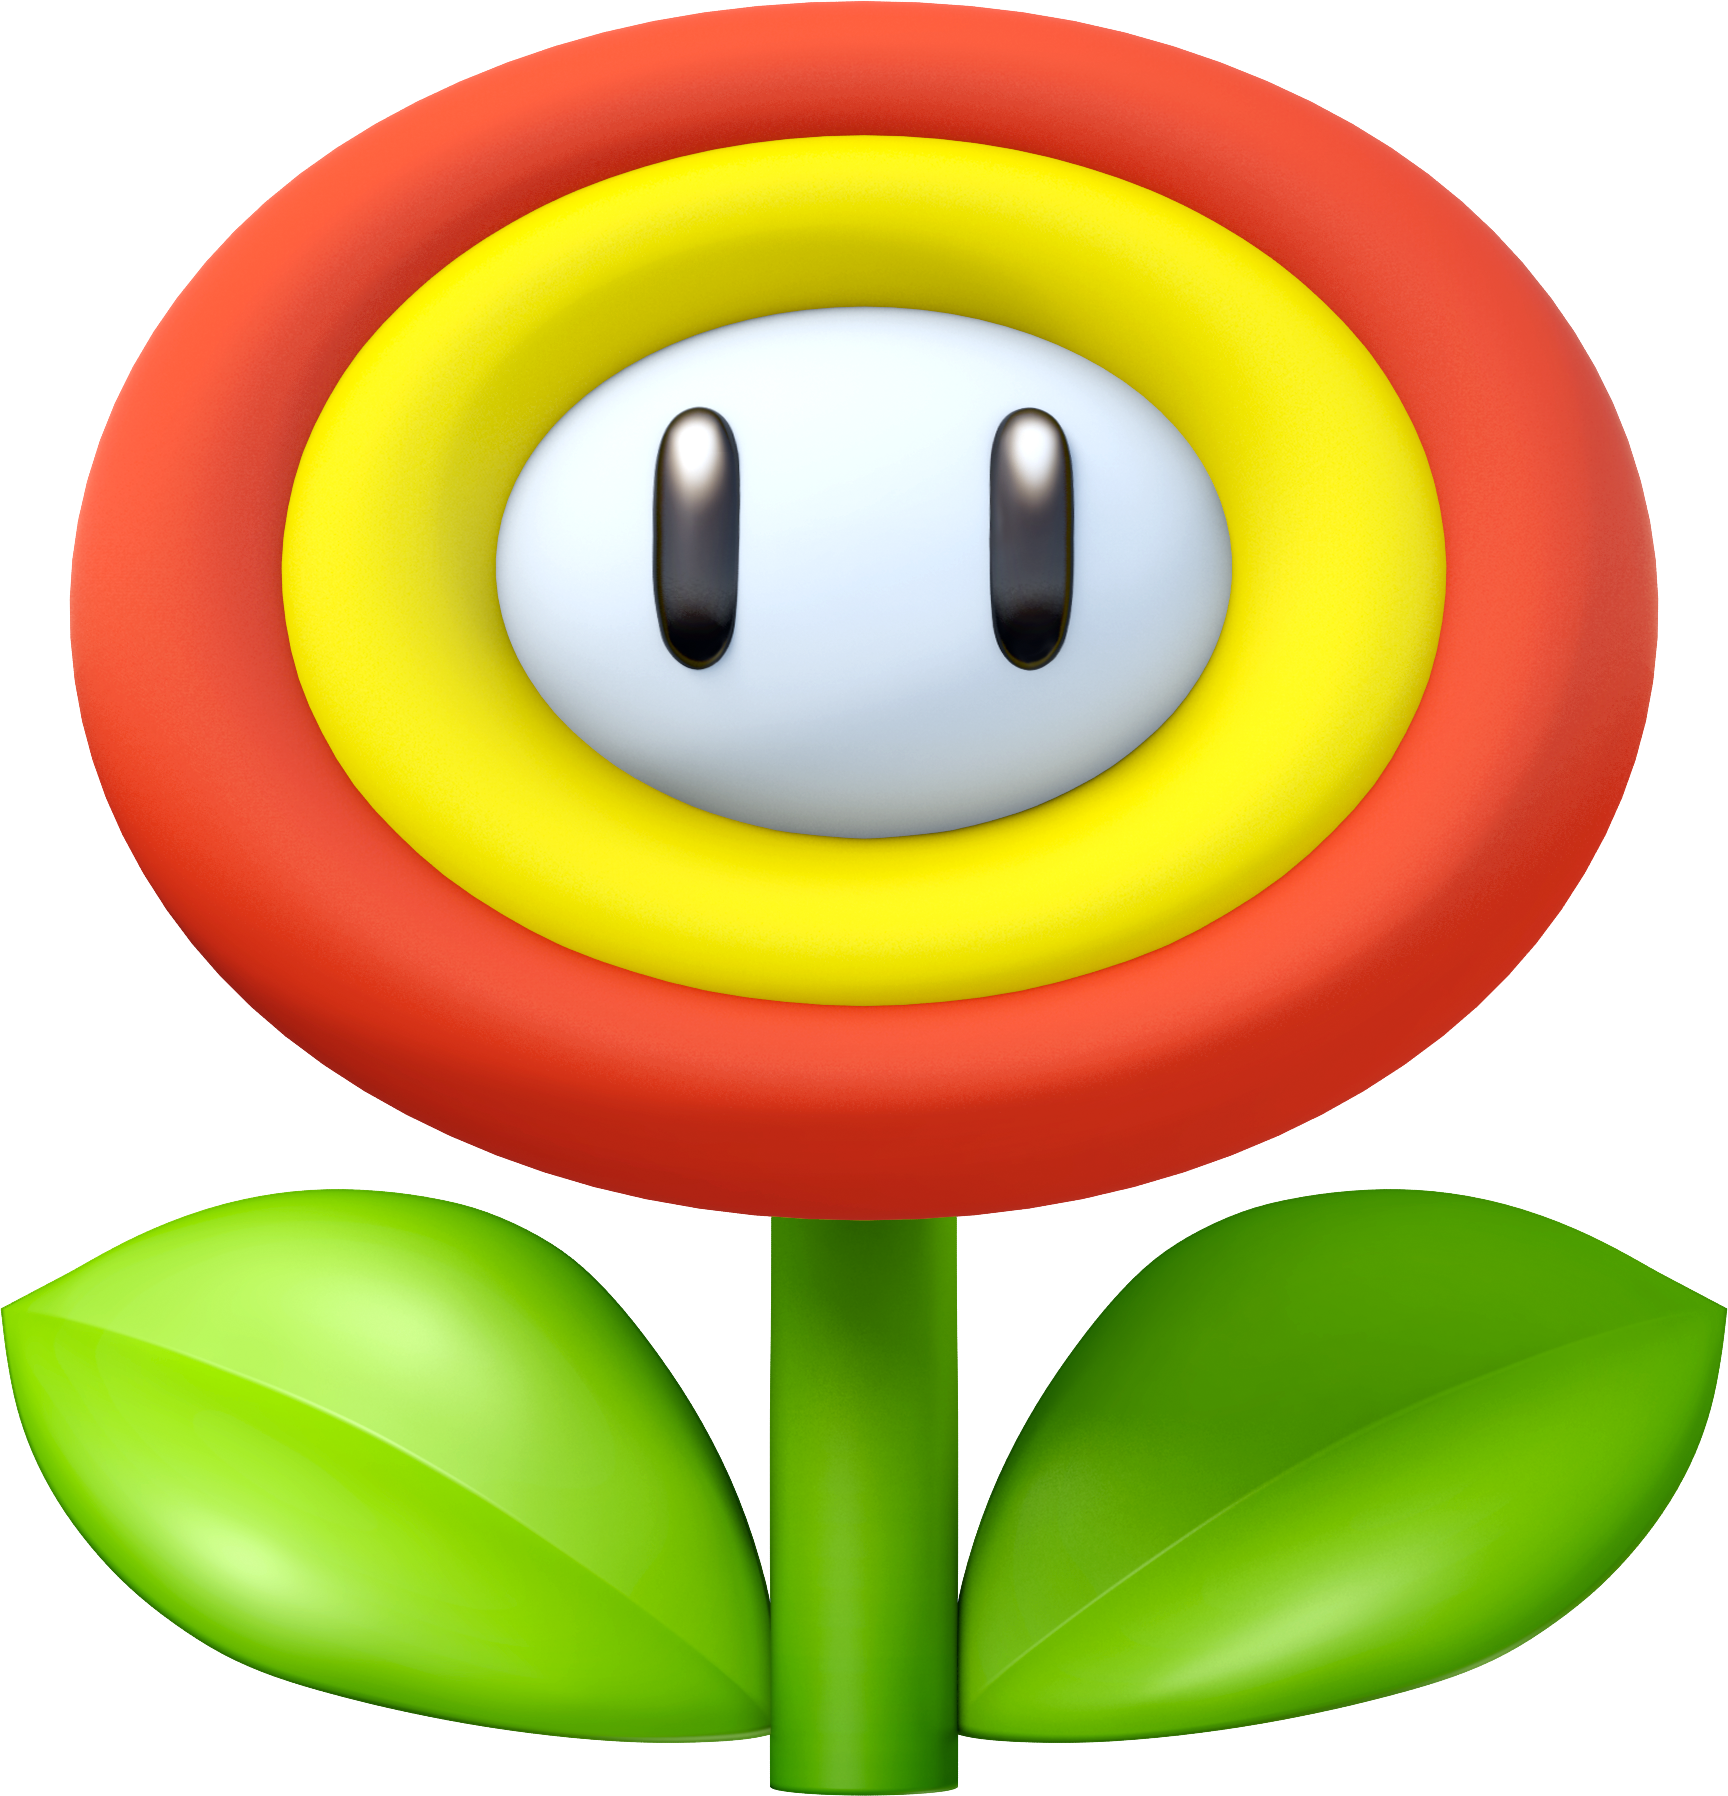 Spicy Zucchini - Super Mario Wiki, the Mario encyclopedia